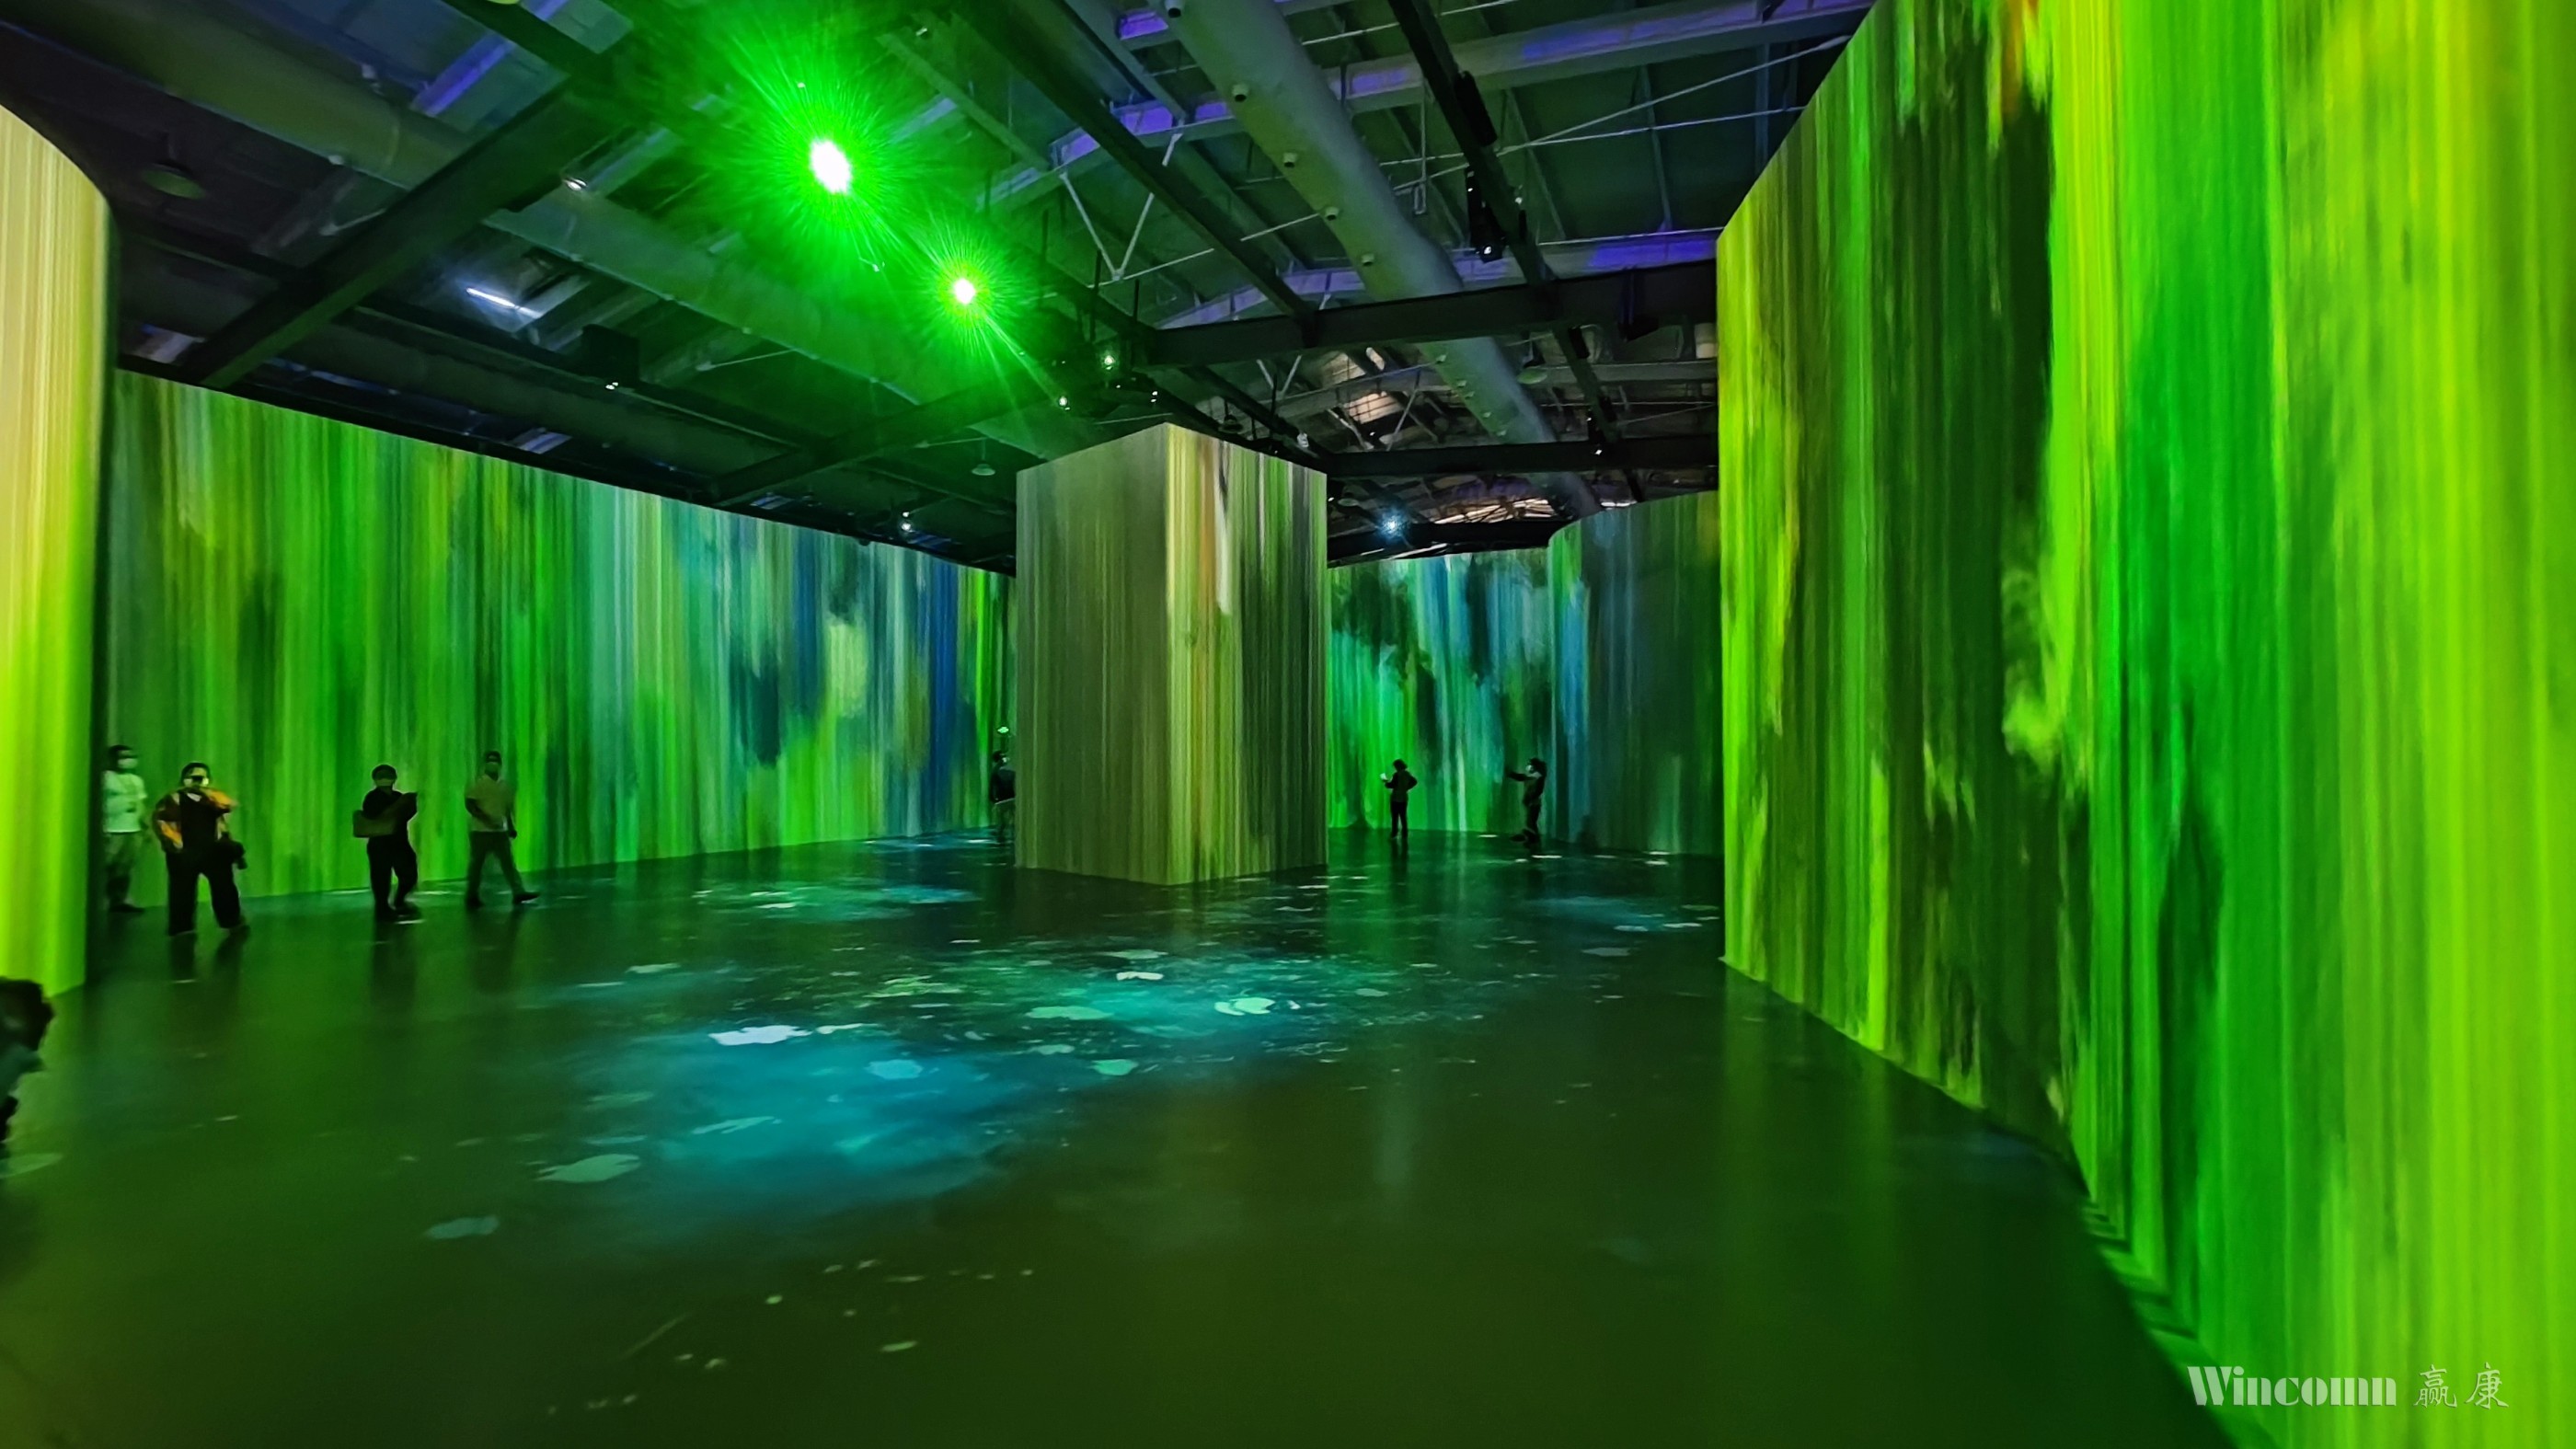 Wincomn Krinda projector creates a surreal immersive exhibition hall(1)(1)(1)